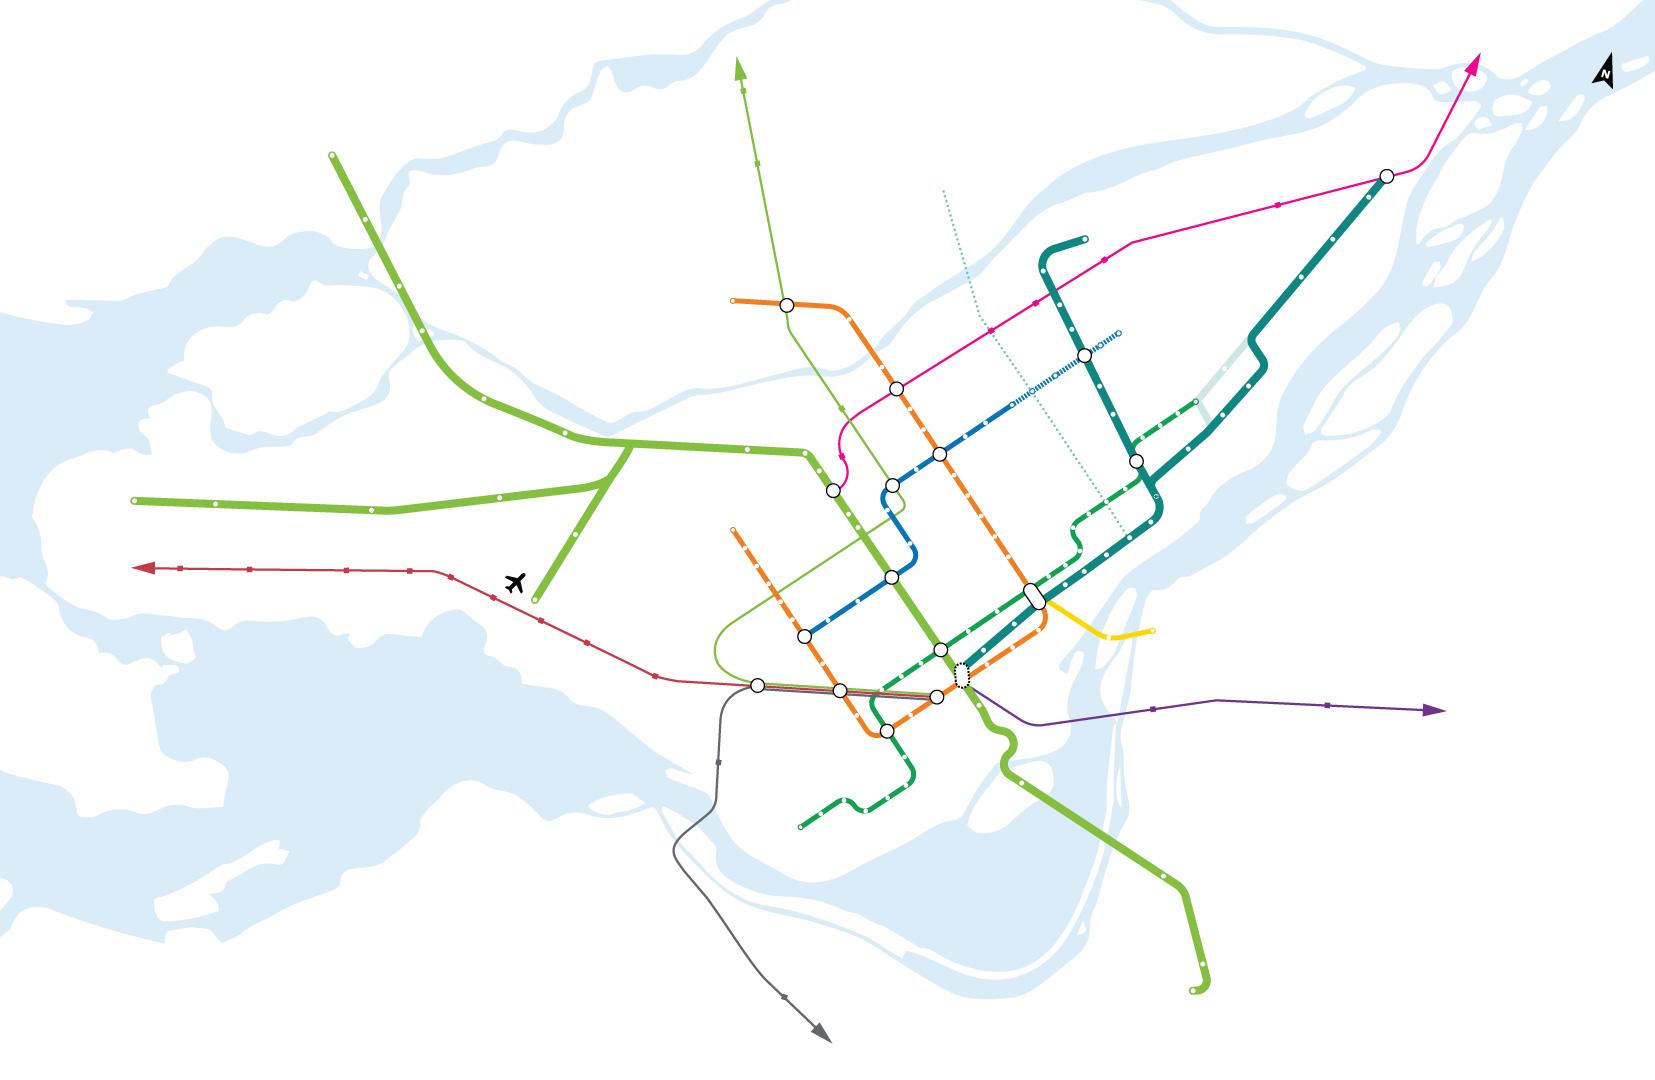 Map of the major metropolitan transportation network